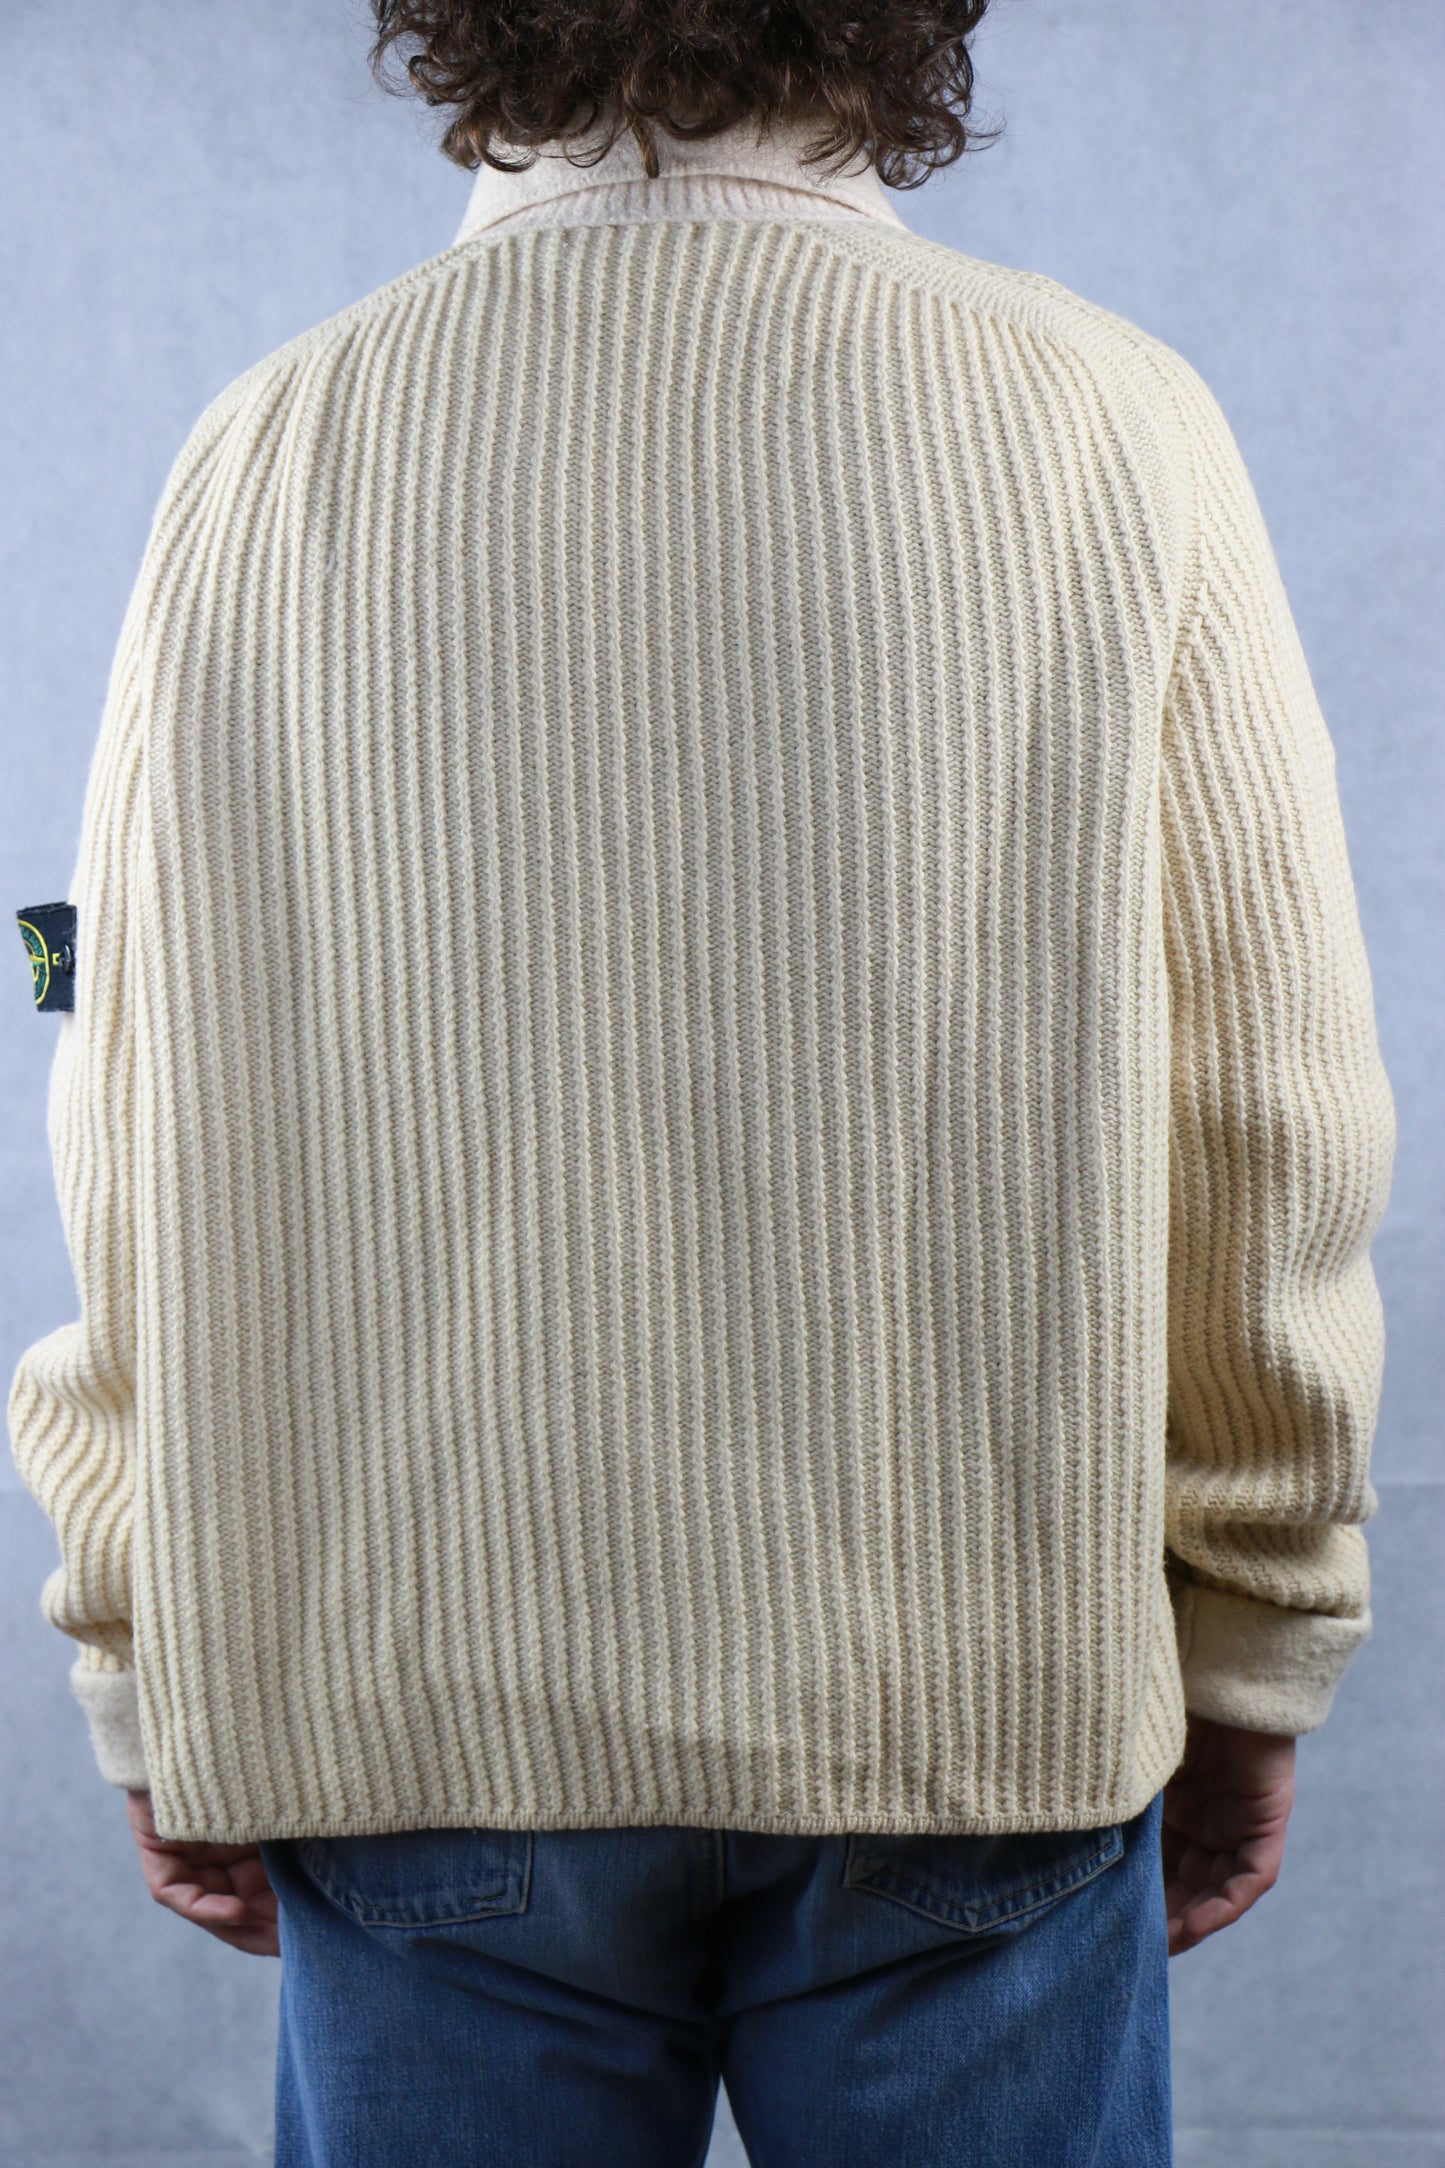 Stone Island Zip Sweater, vintage store clochard92.com